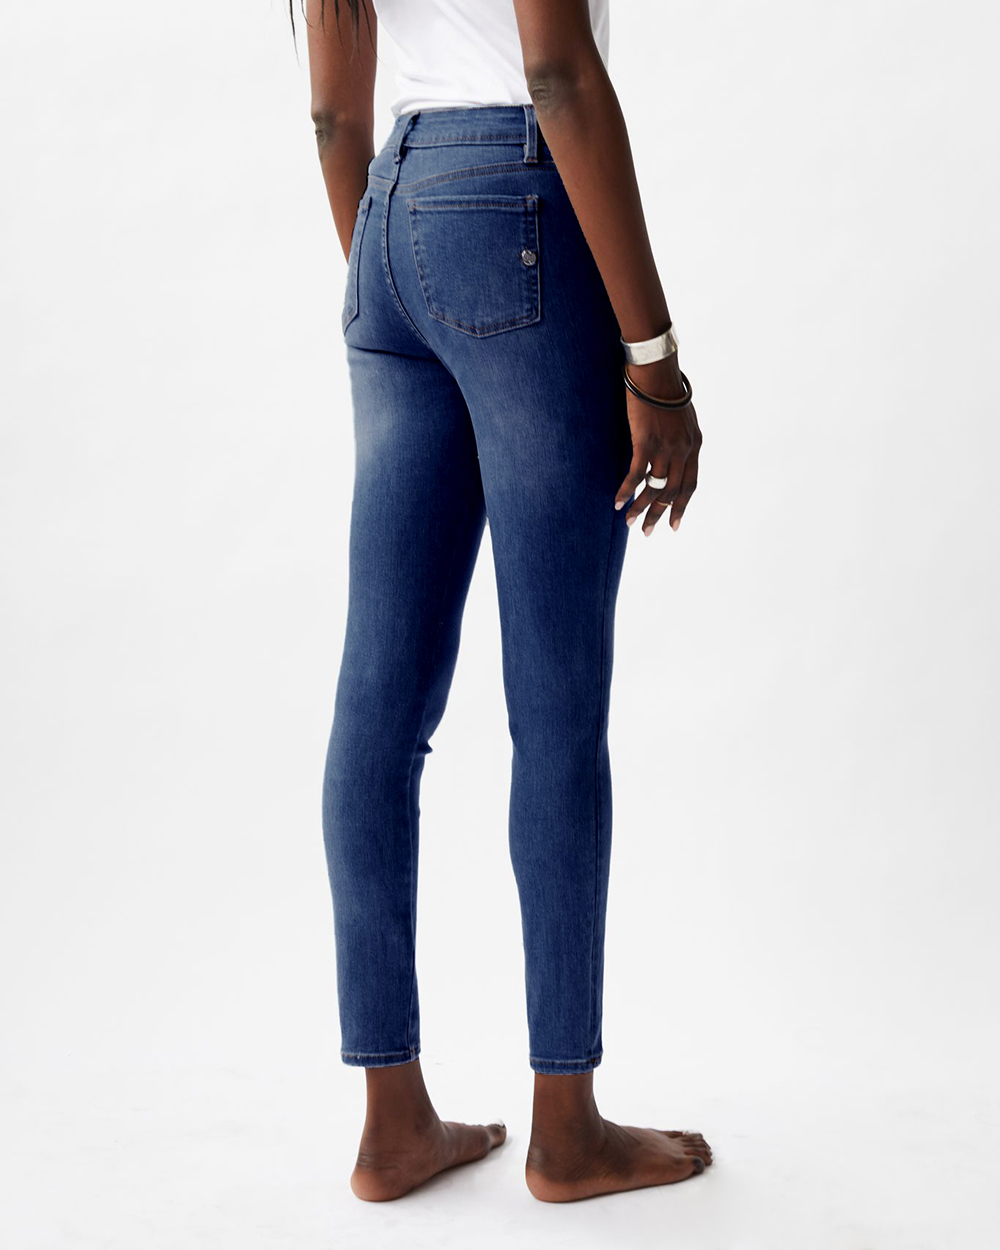 Shaft Jeans · DOLLY MIA LORENZ · Italian High Quality Denim and Apparel